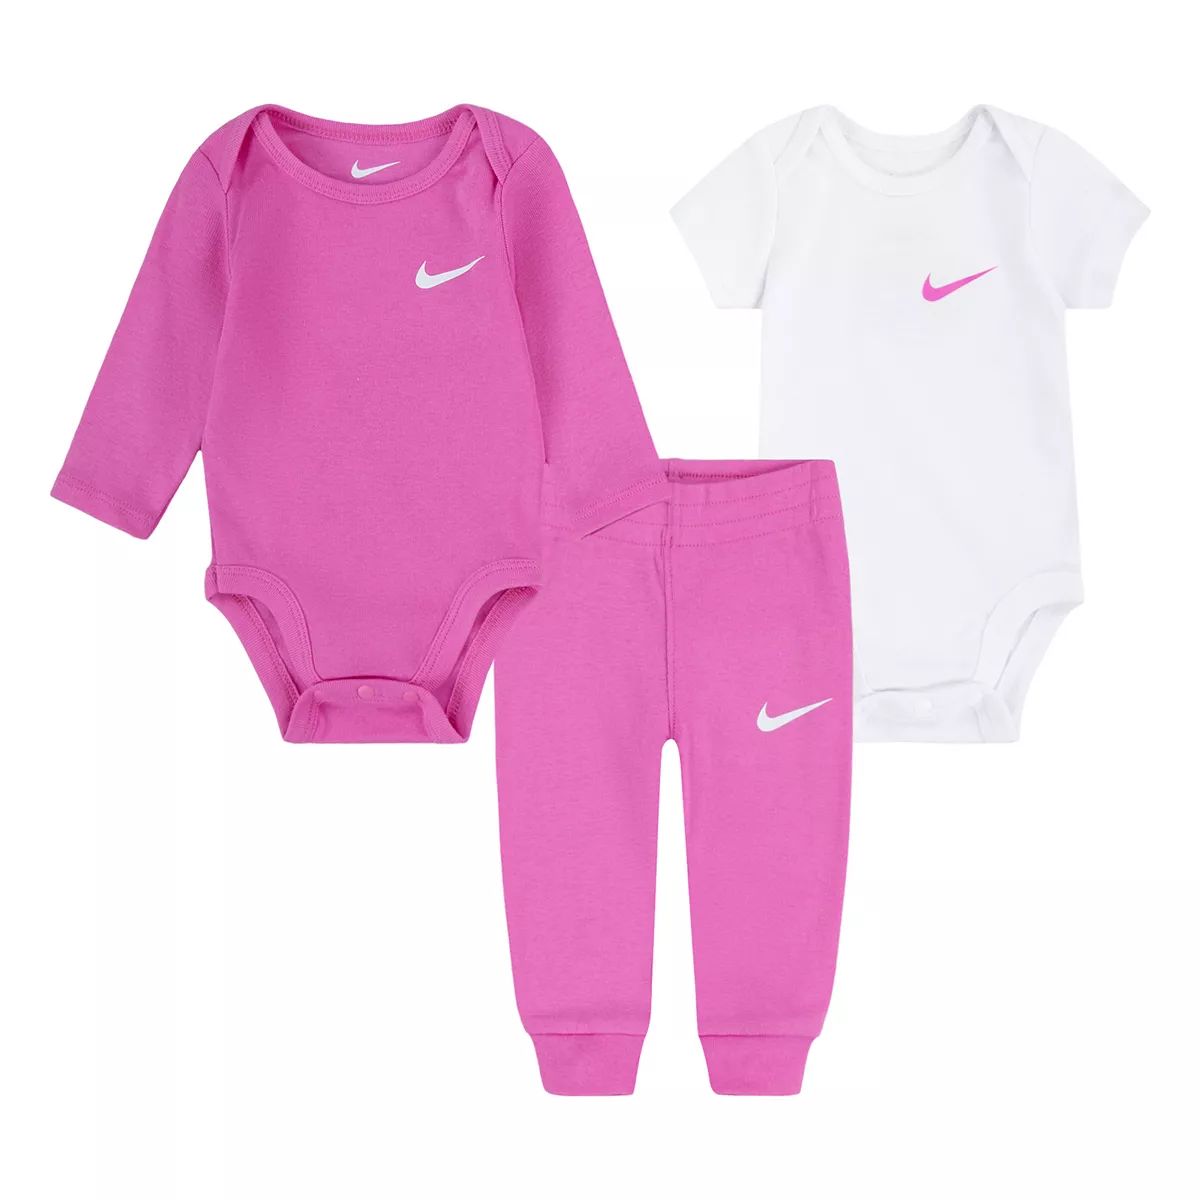 Baby Nike Bodysuits and Pants 3 Piece Set | Kohl's